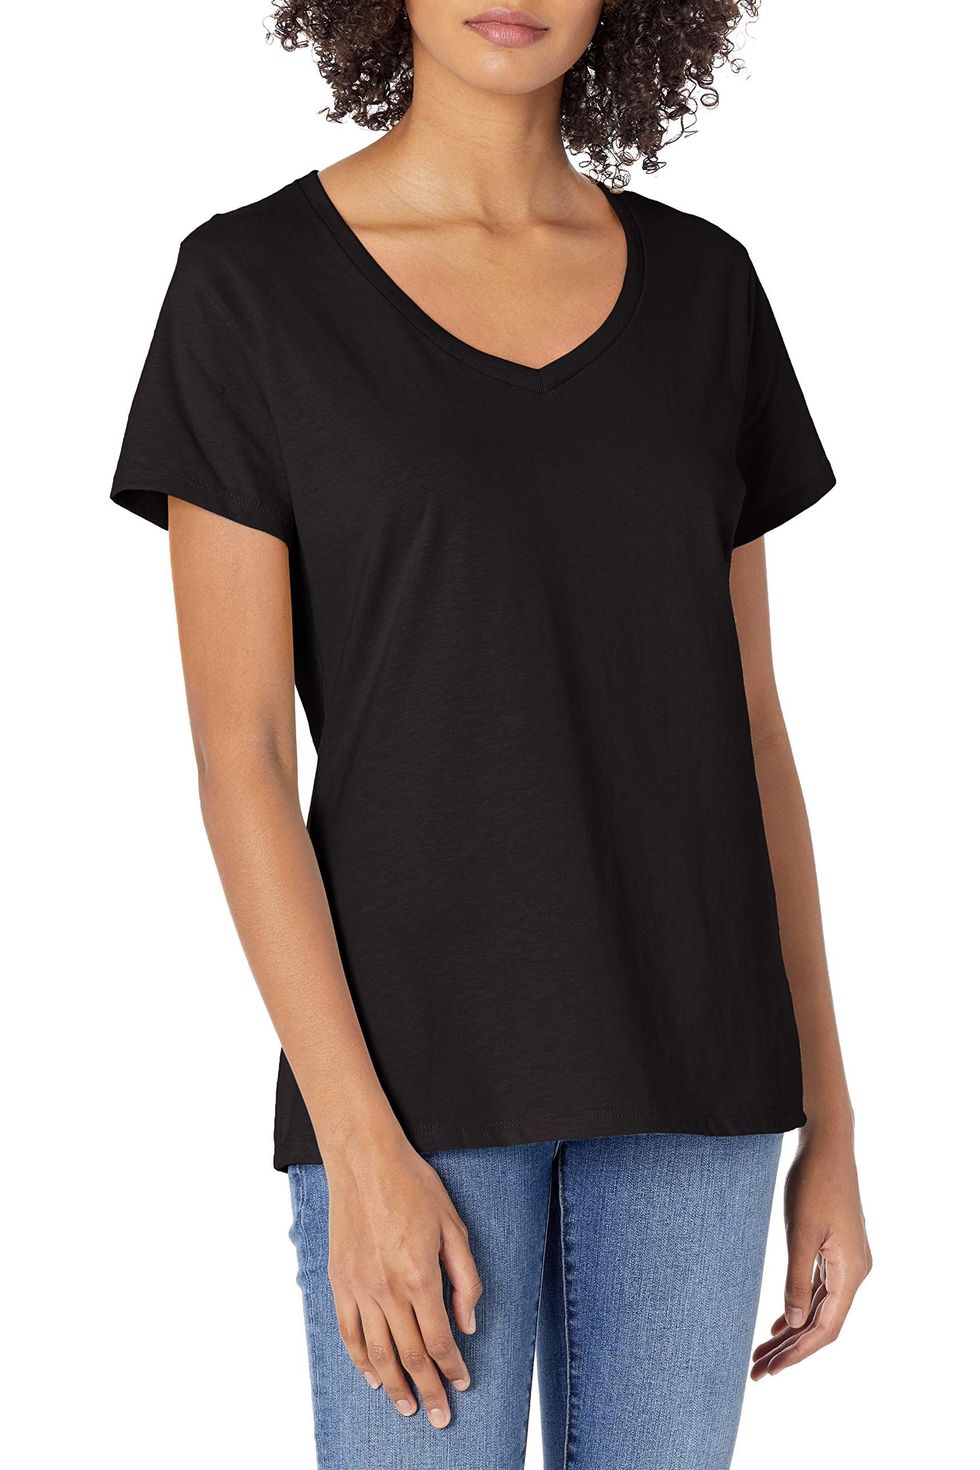 friktion jurist Rationel 21 Best V-Neck T-Shirts for Women in 2023 - Cute Basic V-Neck Tees